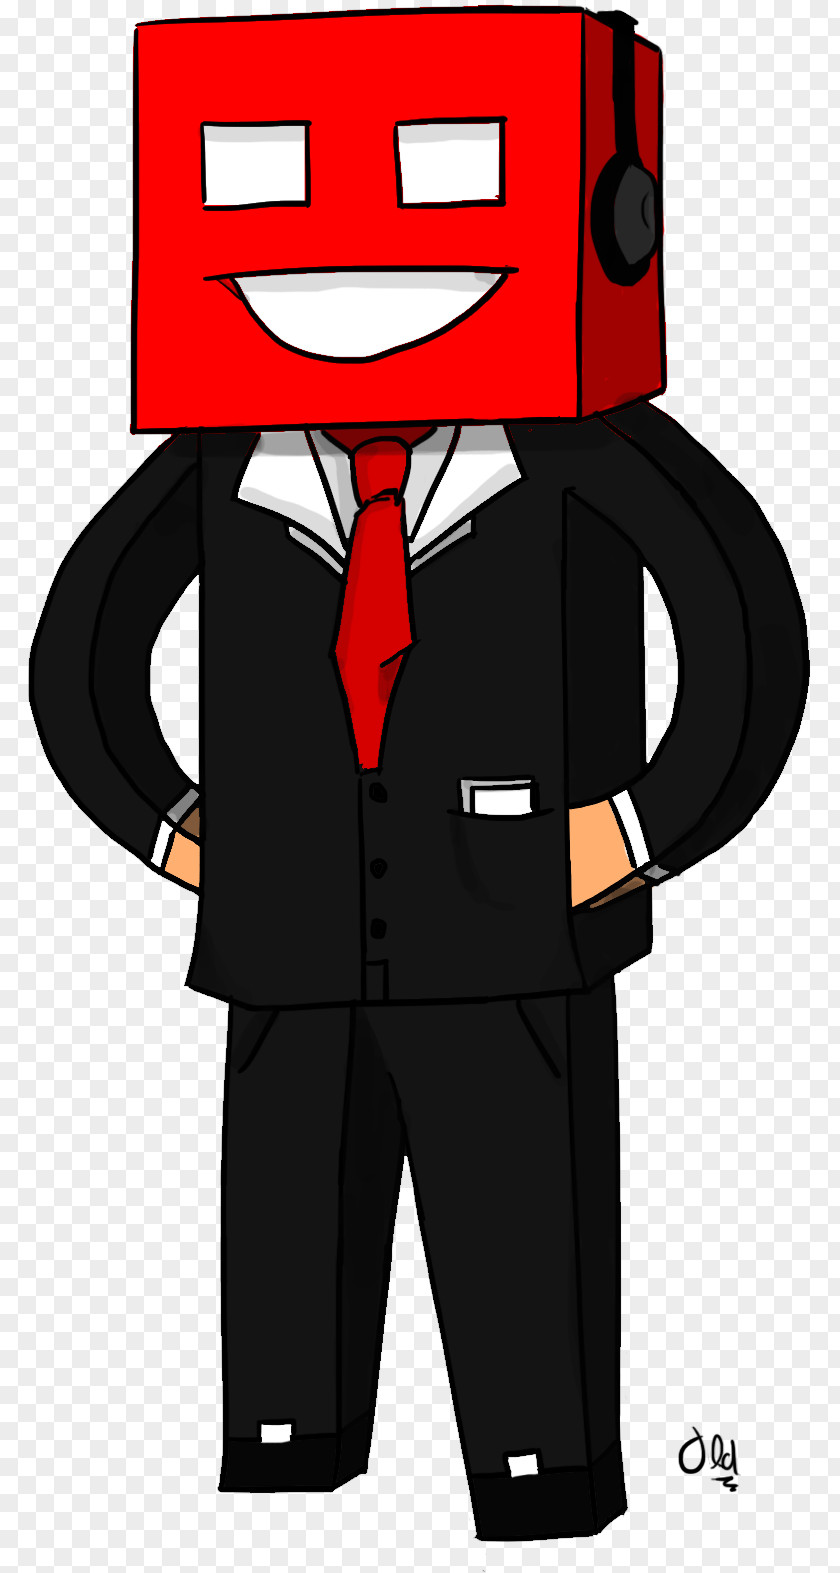 Redskin Cartoon Character Font PNG